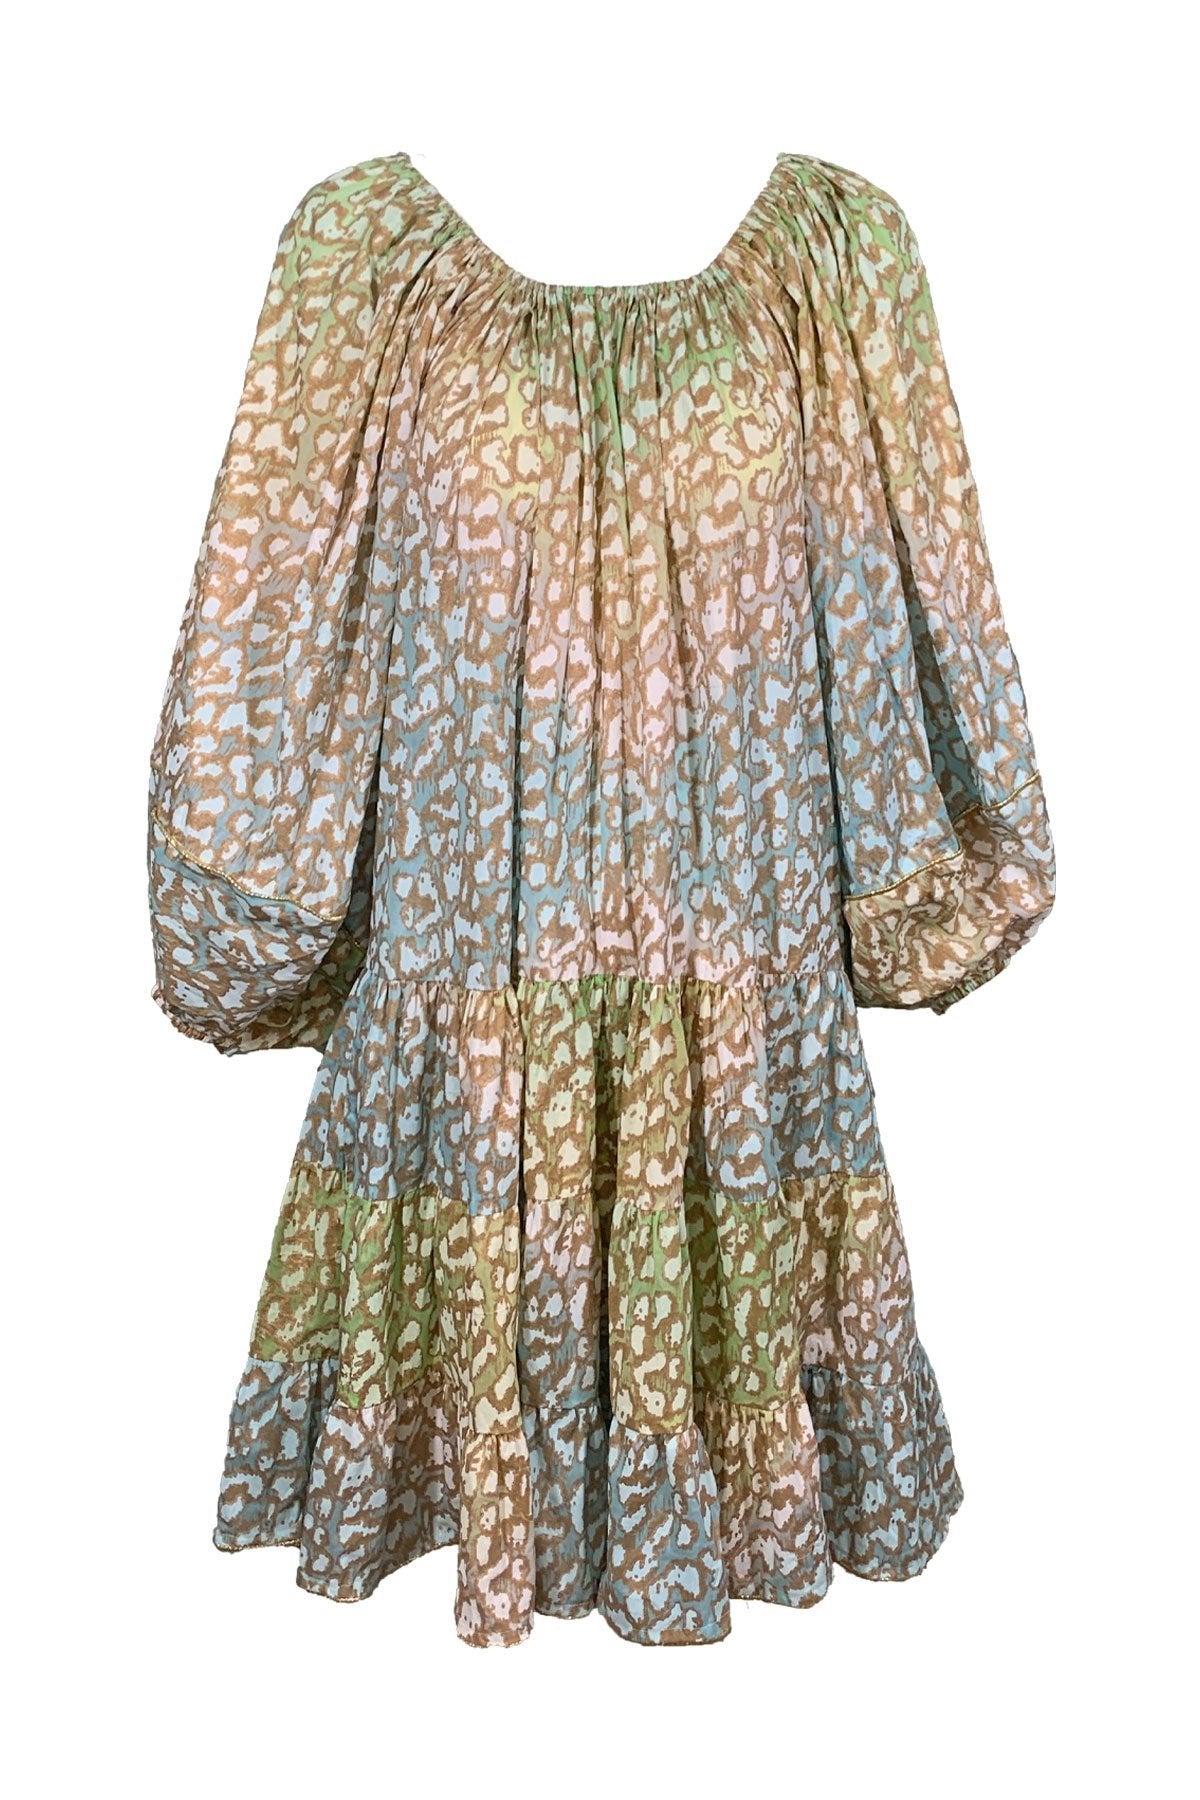 Tie Dye Boho Layer Dress with Snow Leopard Print - shop-olivia.com